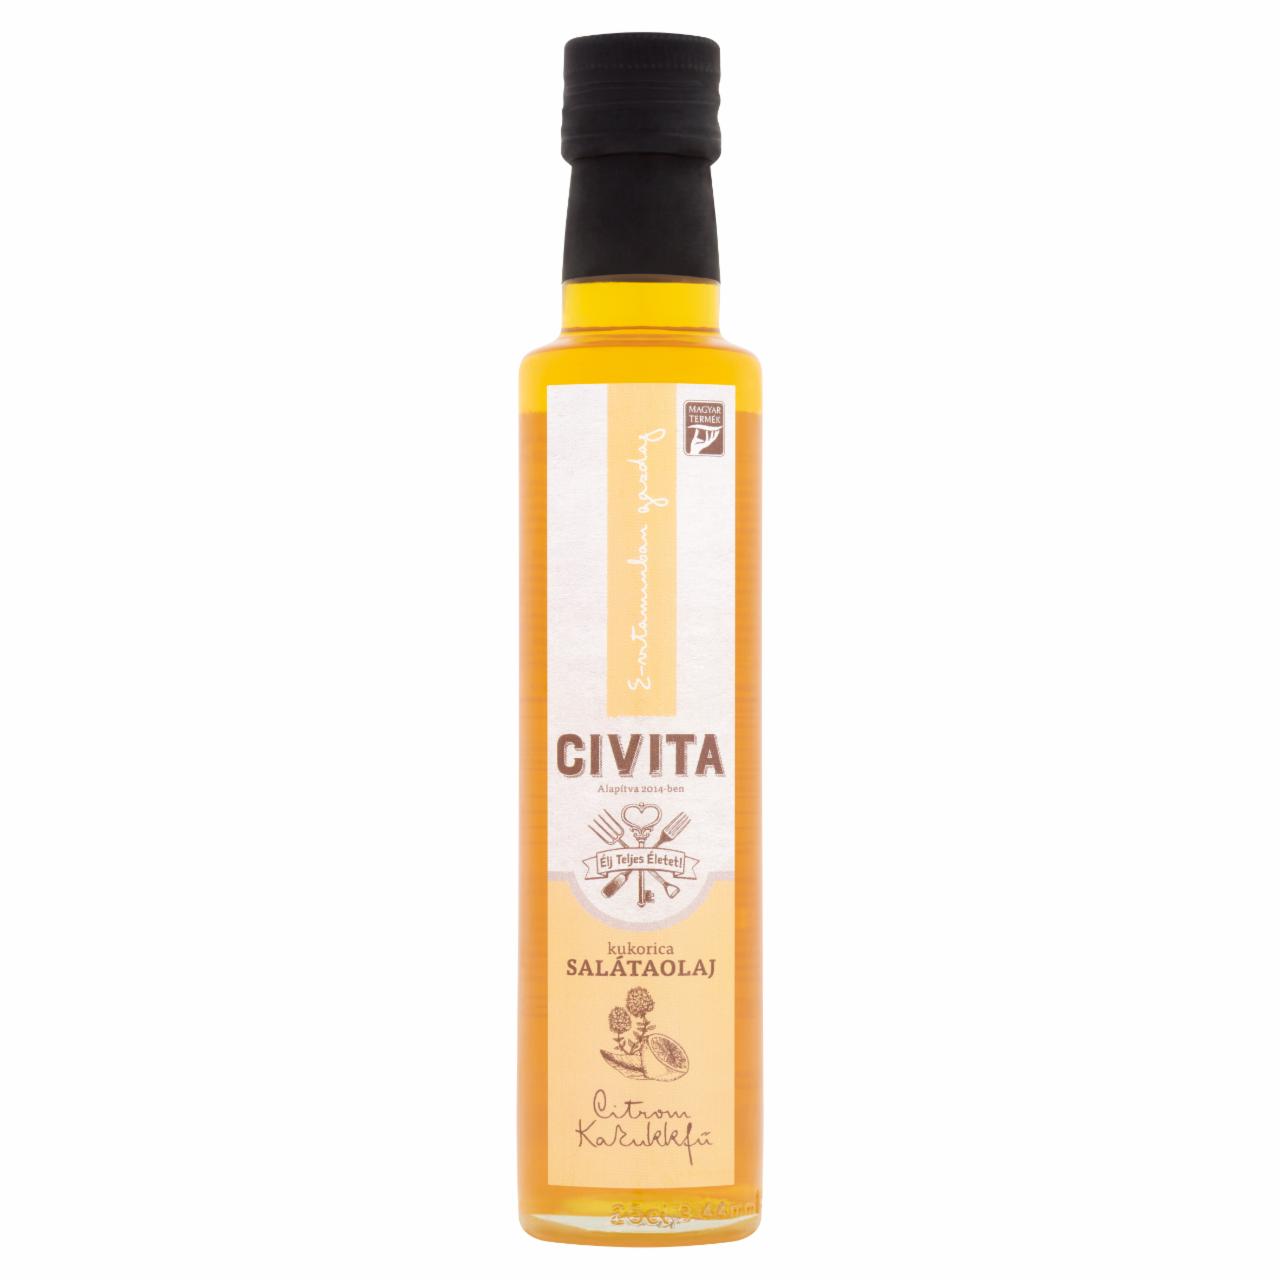 Képek - Civita citrom-kakukkfű kukorica salátaolaj 250 ml